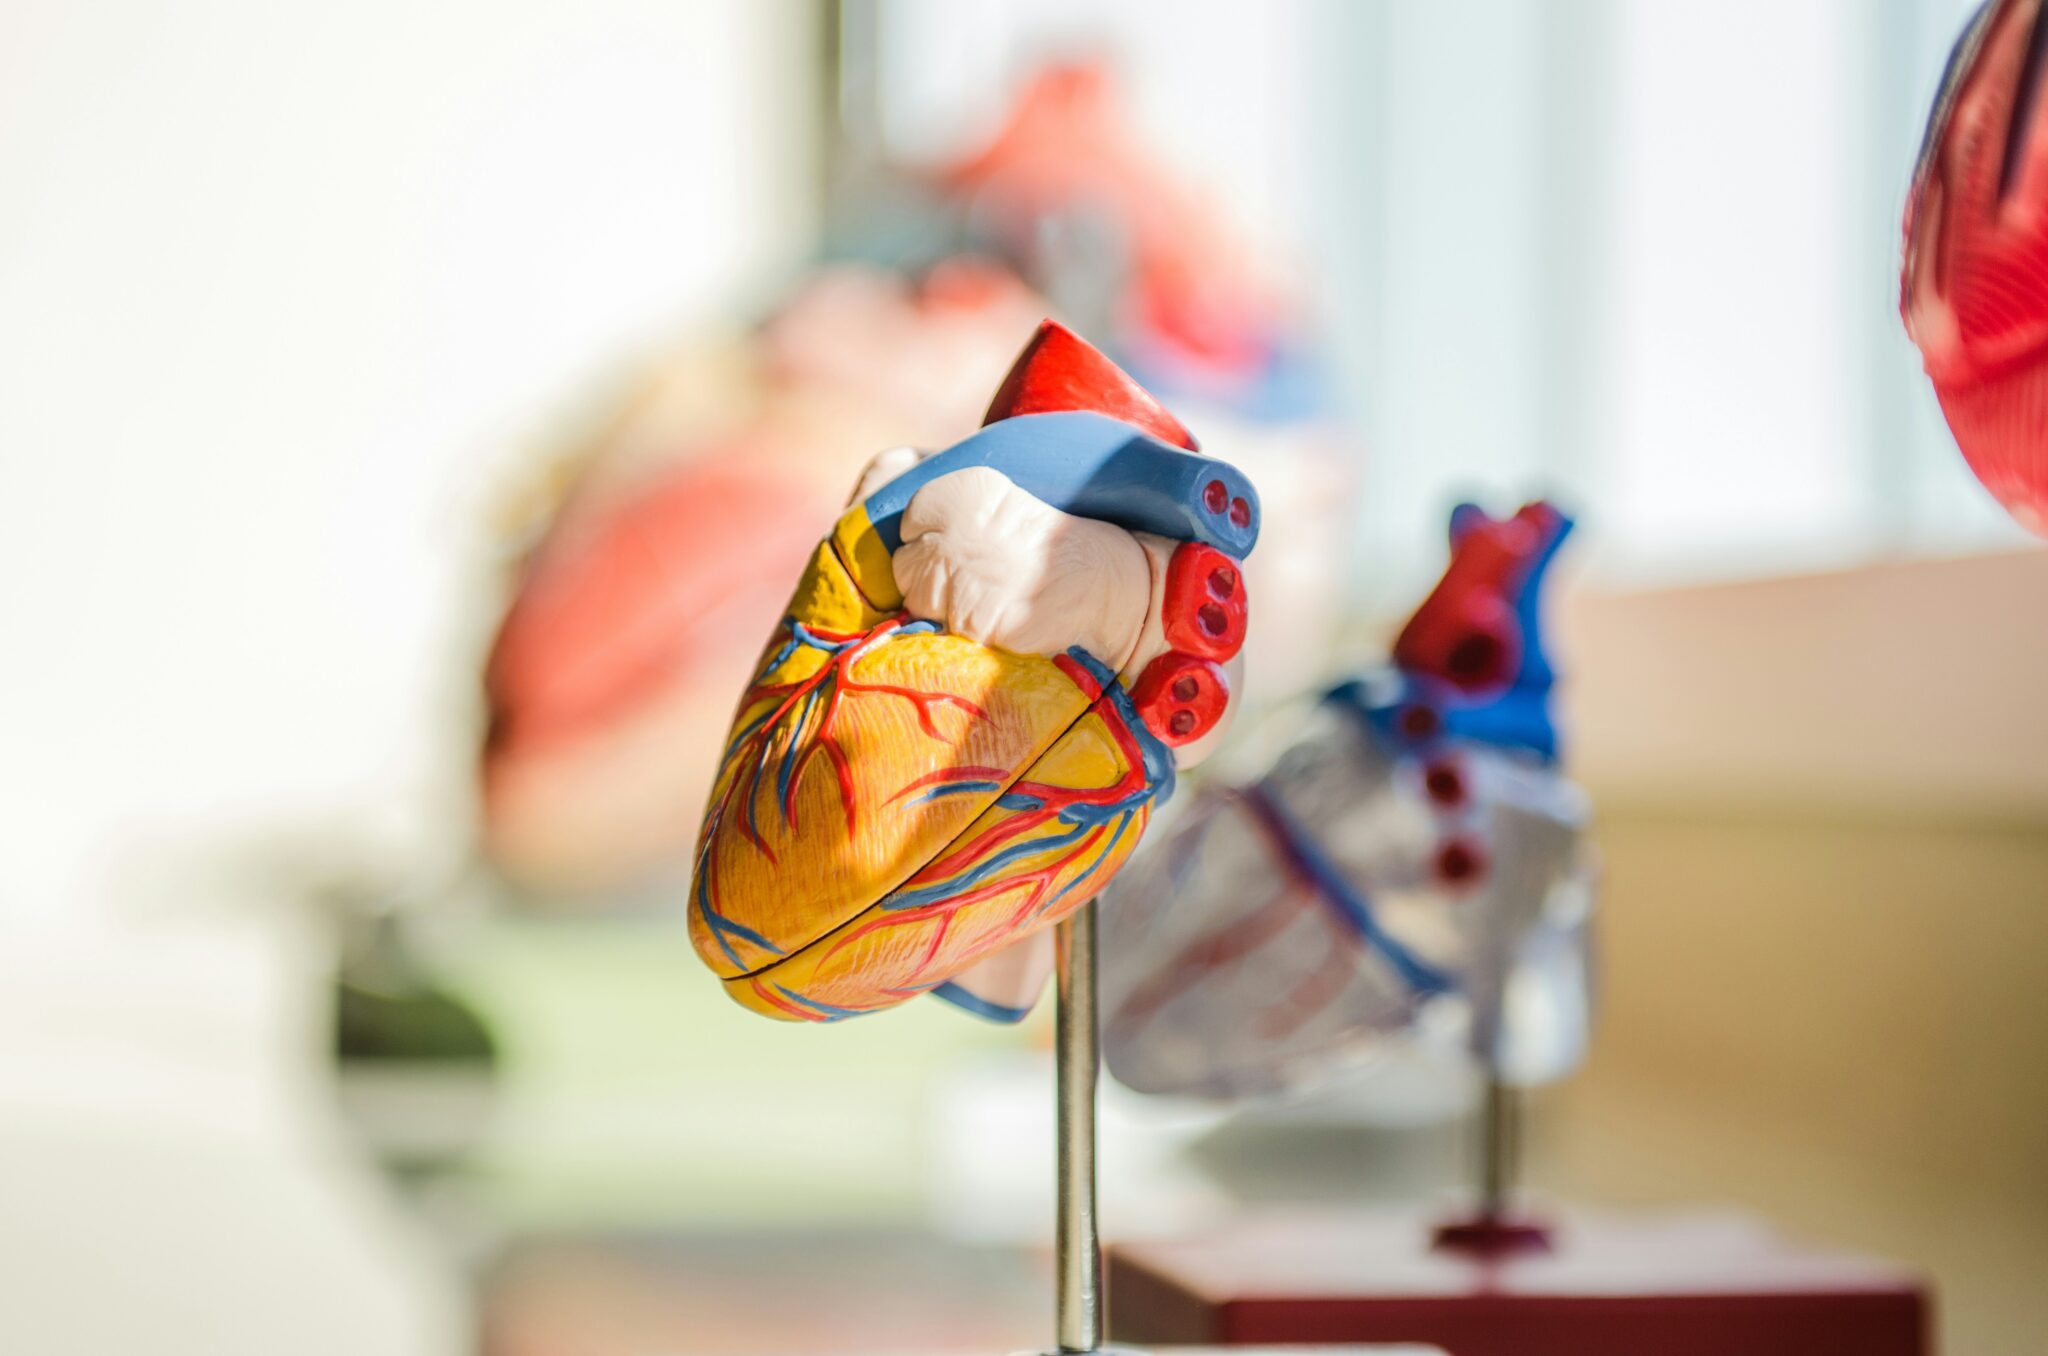 Plastic model of human heart